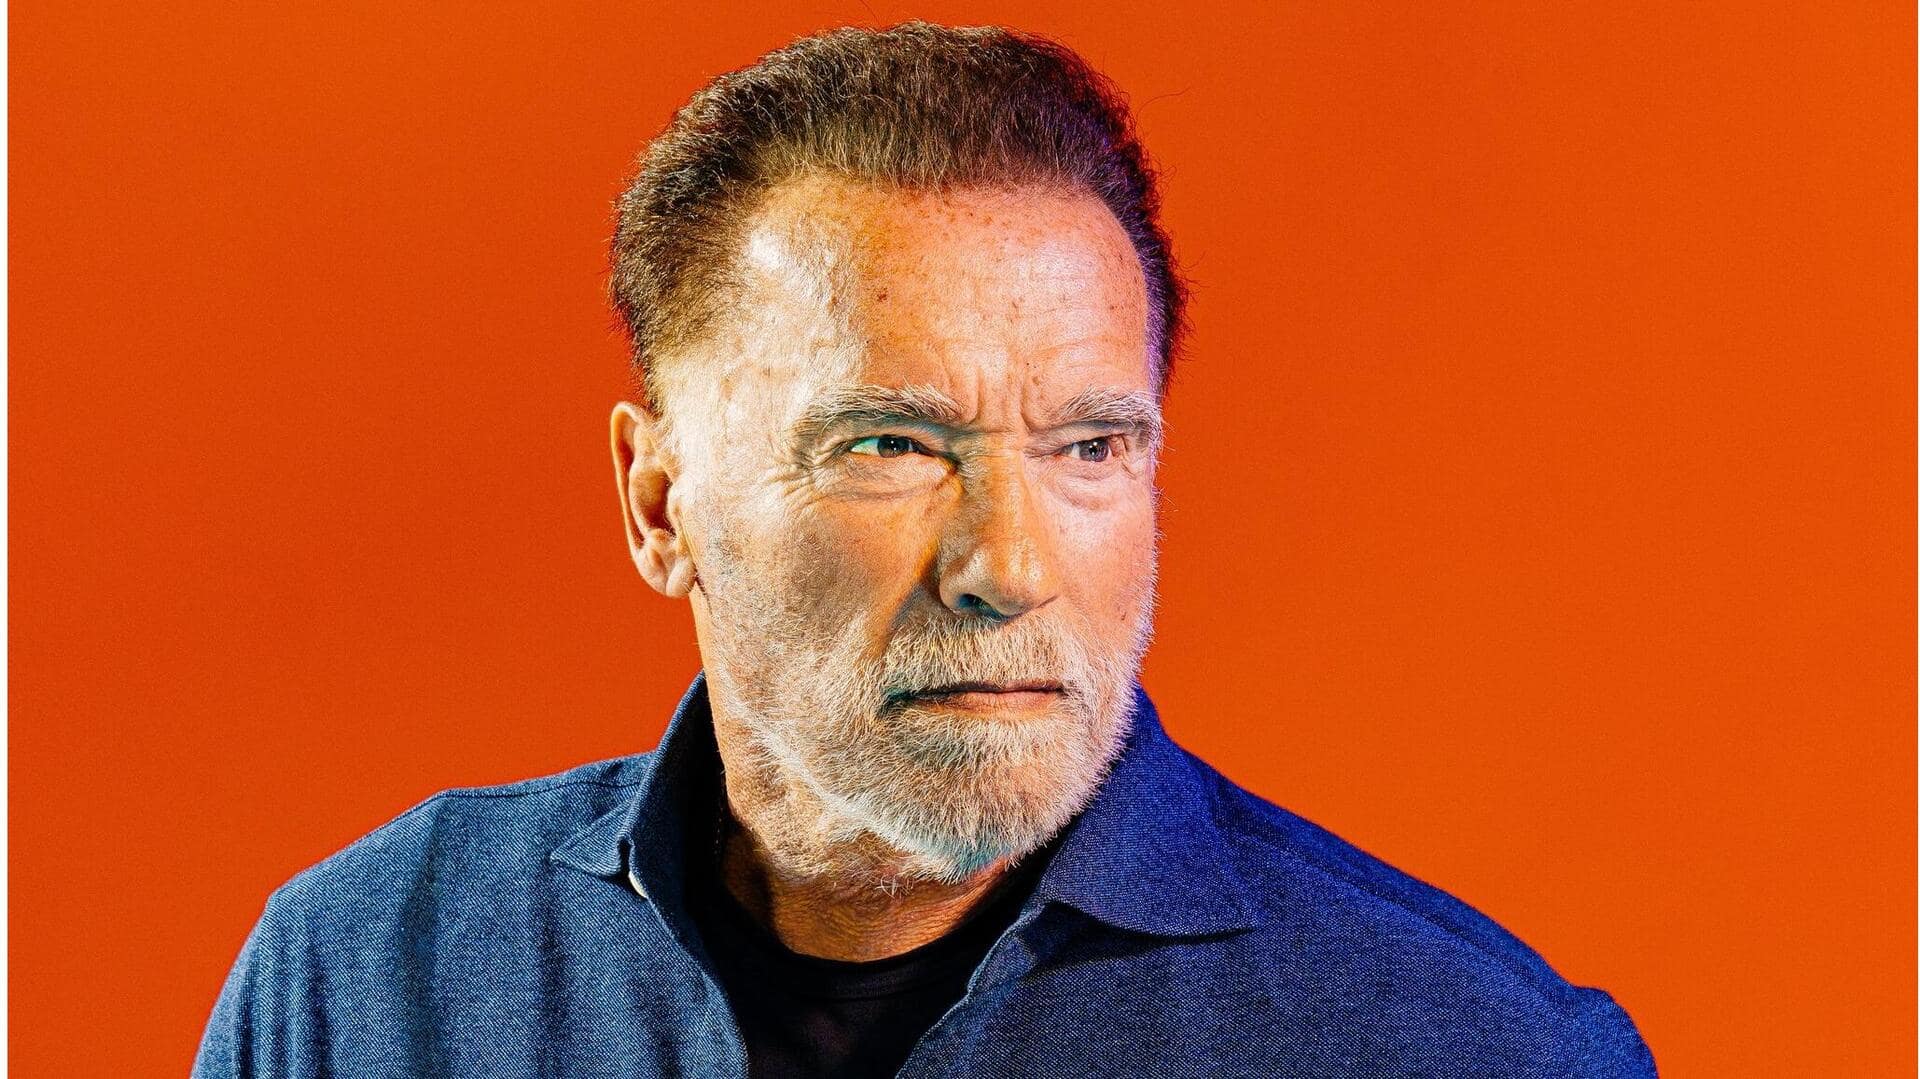 Arnold Schwarzenegger's best movies per IMDb